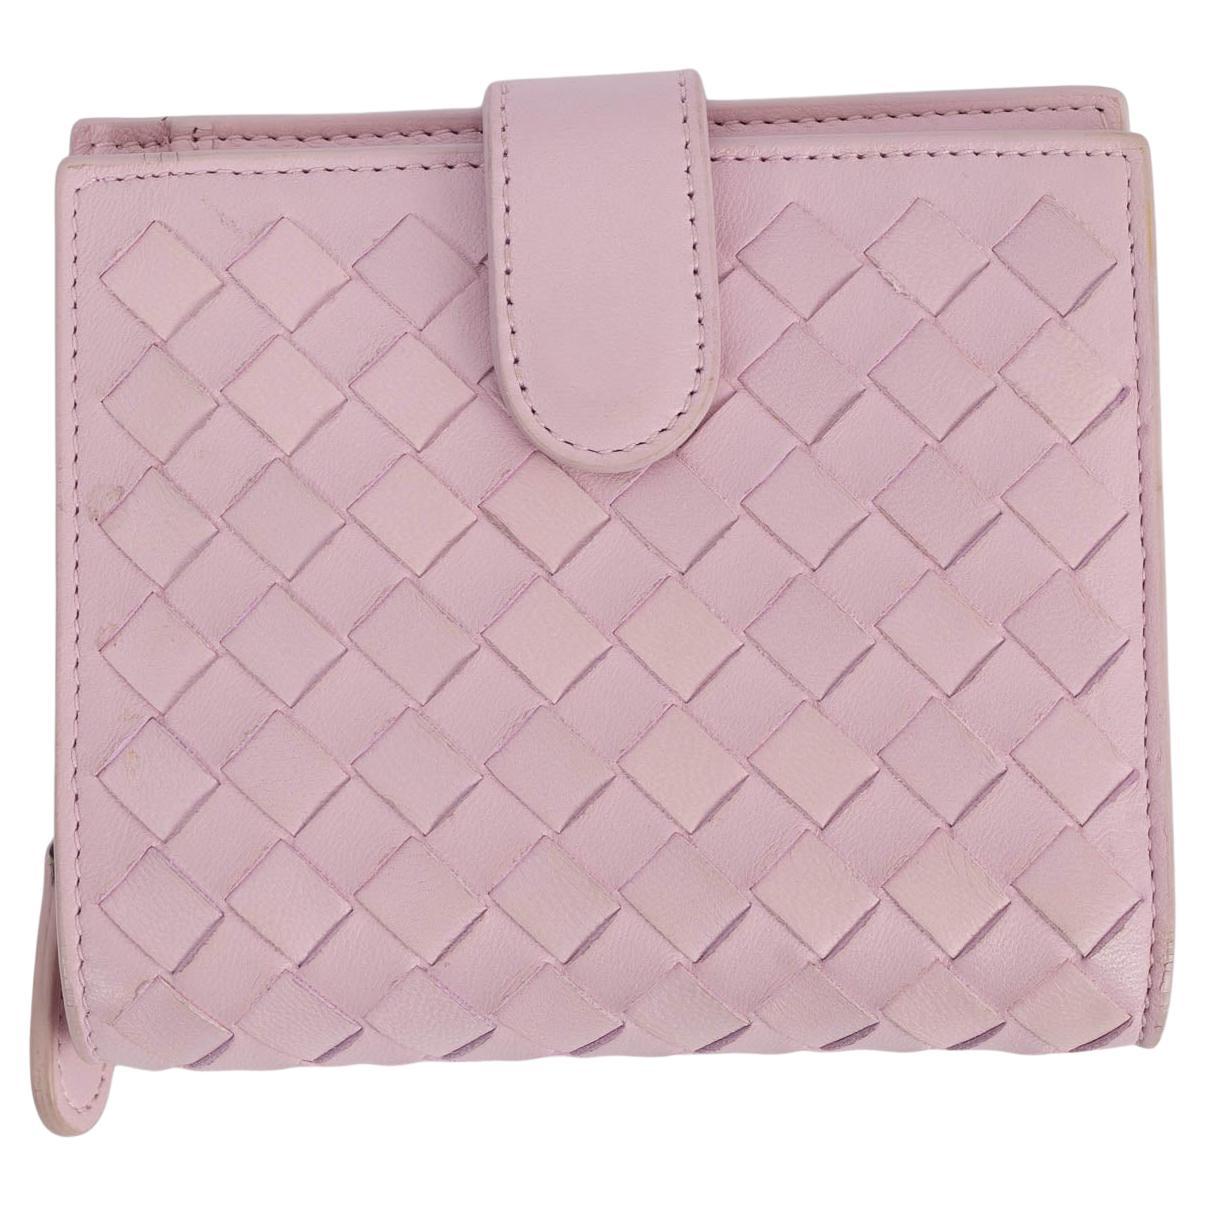 BOTTEGA VENETA pink leather INTRECCIATO Compact Wallet For Sale